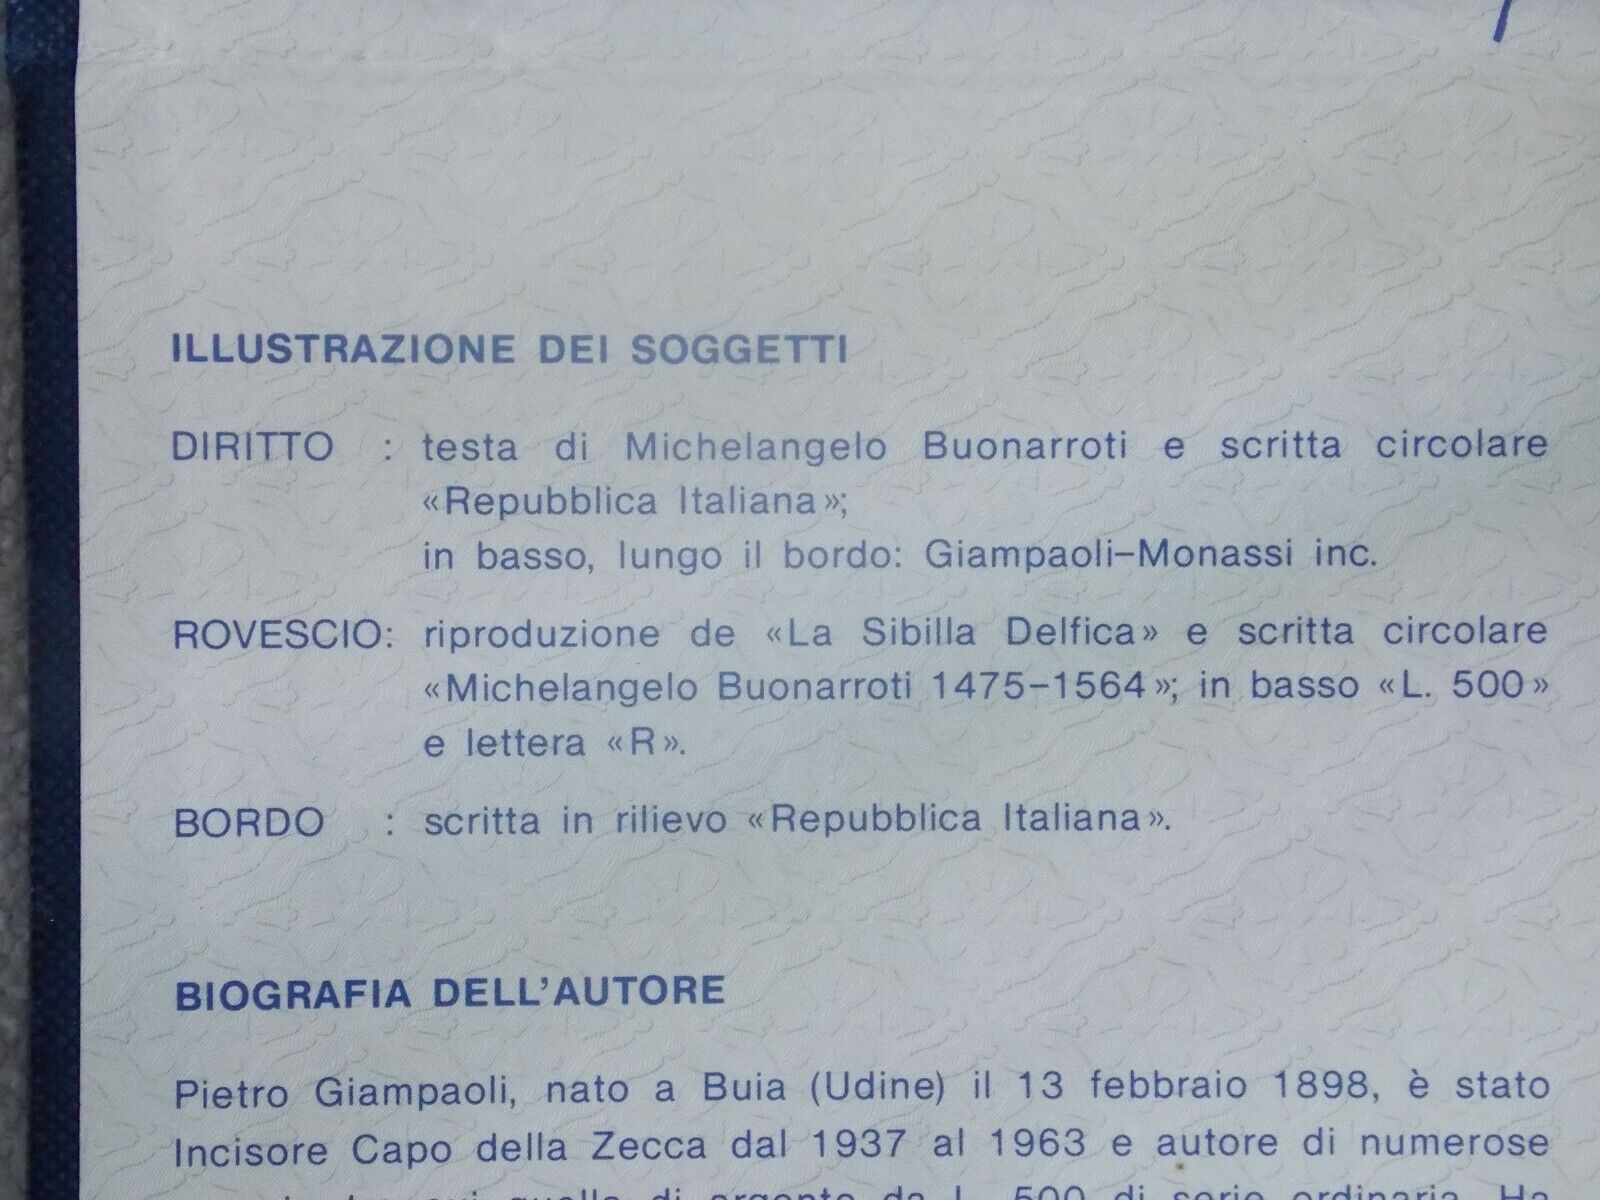 Italy Commemorative Honoring Michelangelo500 Lire Proof and 10,000 Lire banknote Без бренда - фотография #2